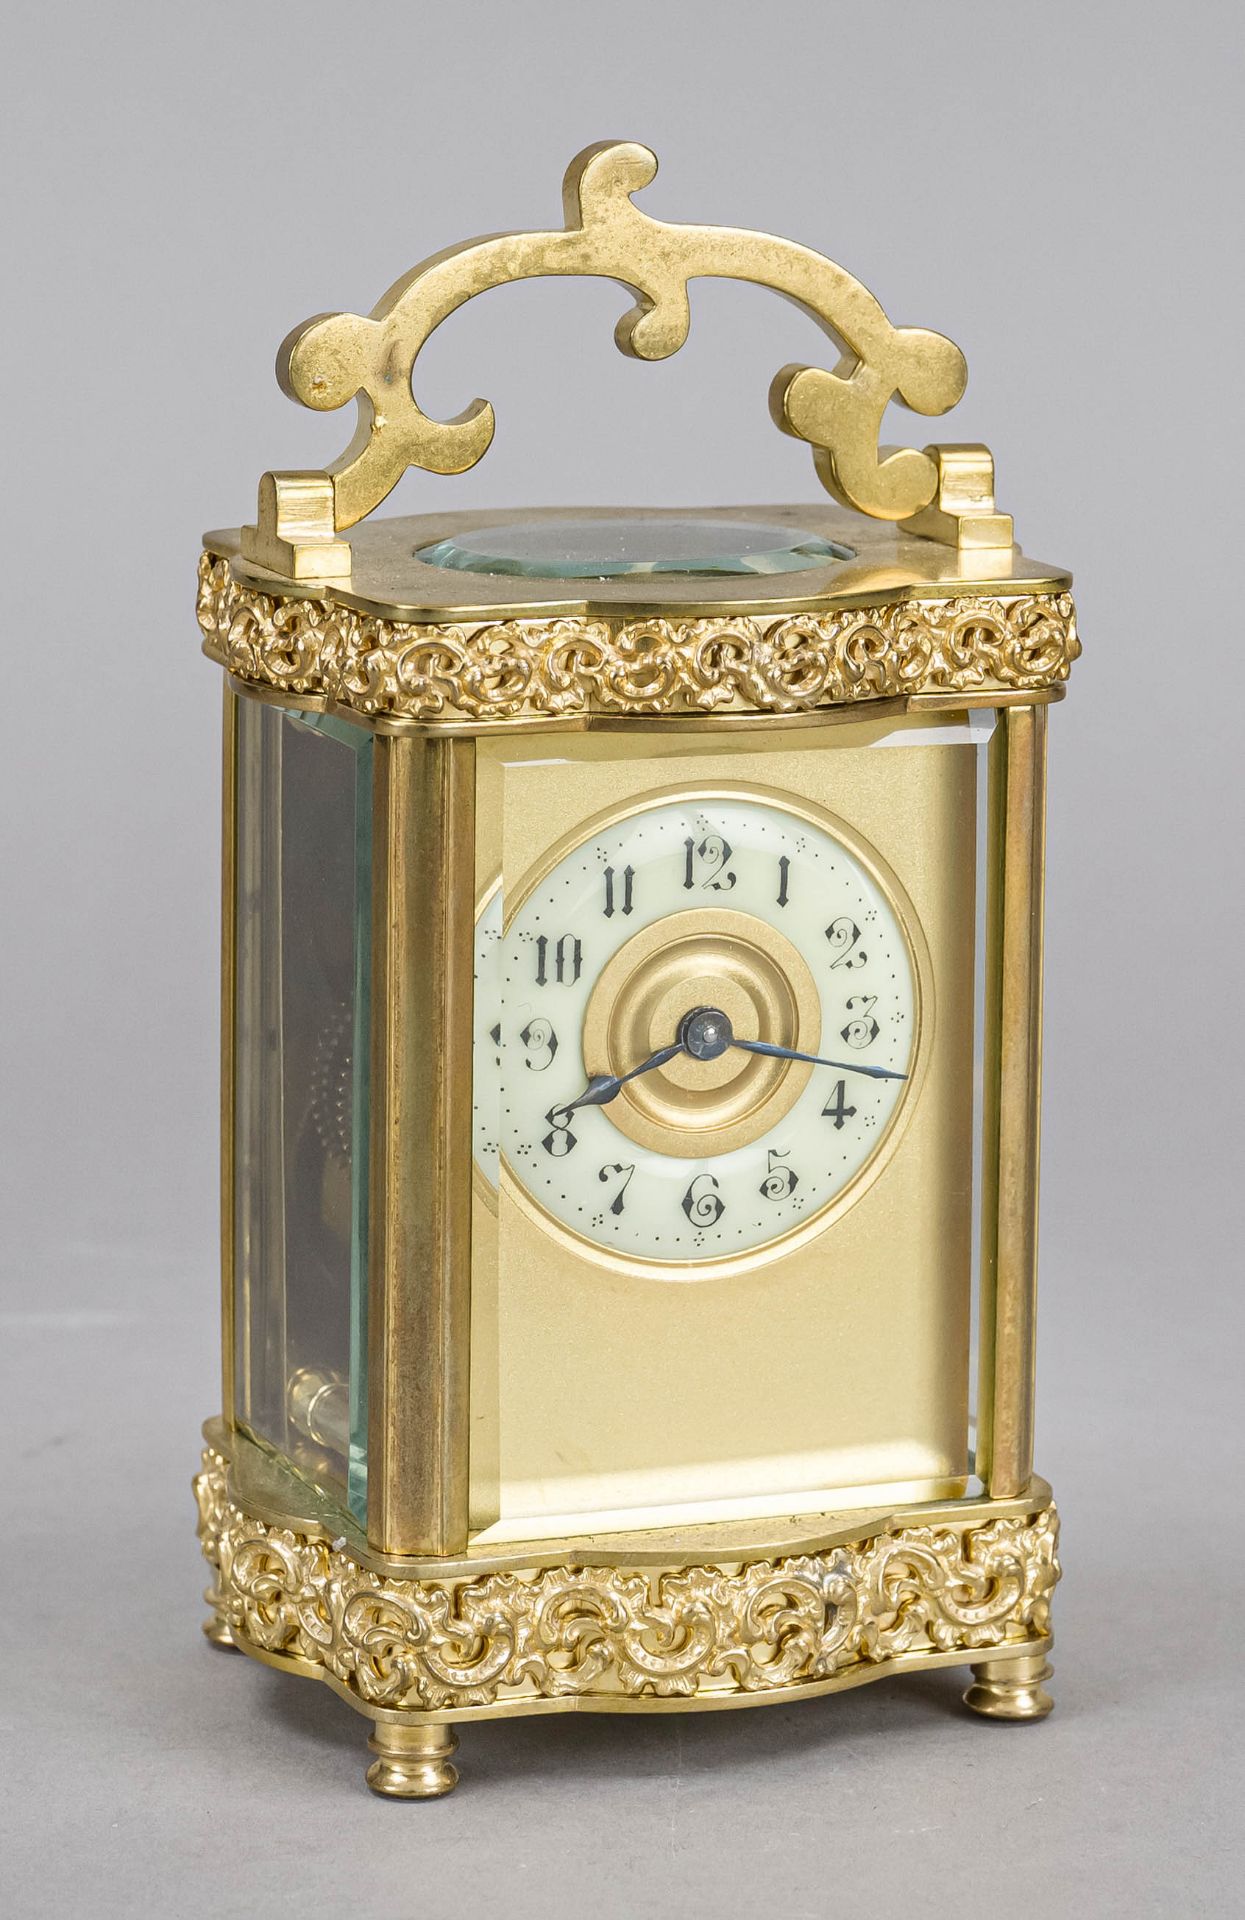 Travel clock, France, circa 1890, fire-gilt brass, curved case, fire-gilt applications, top